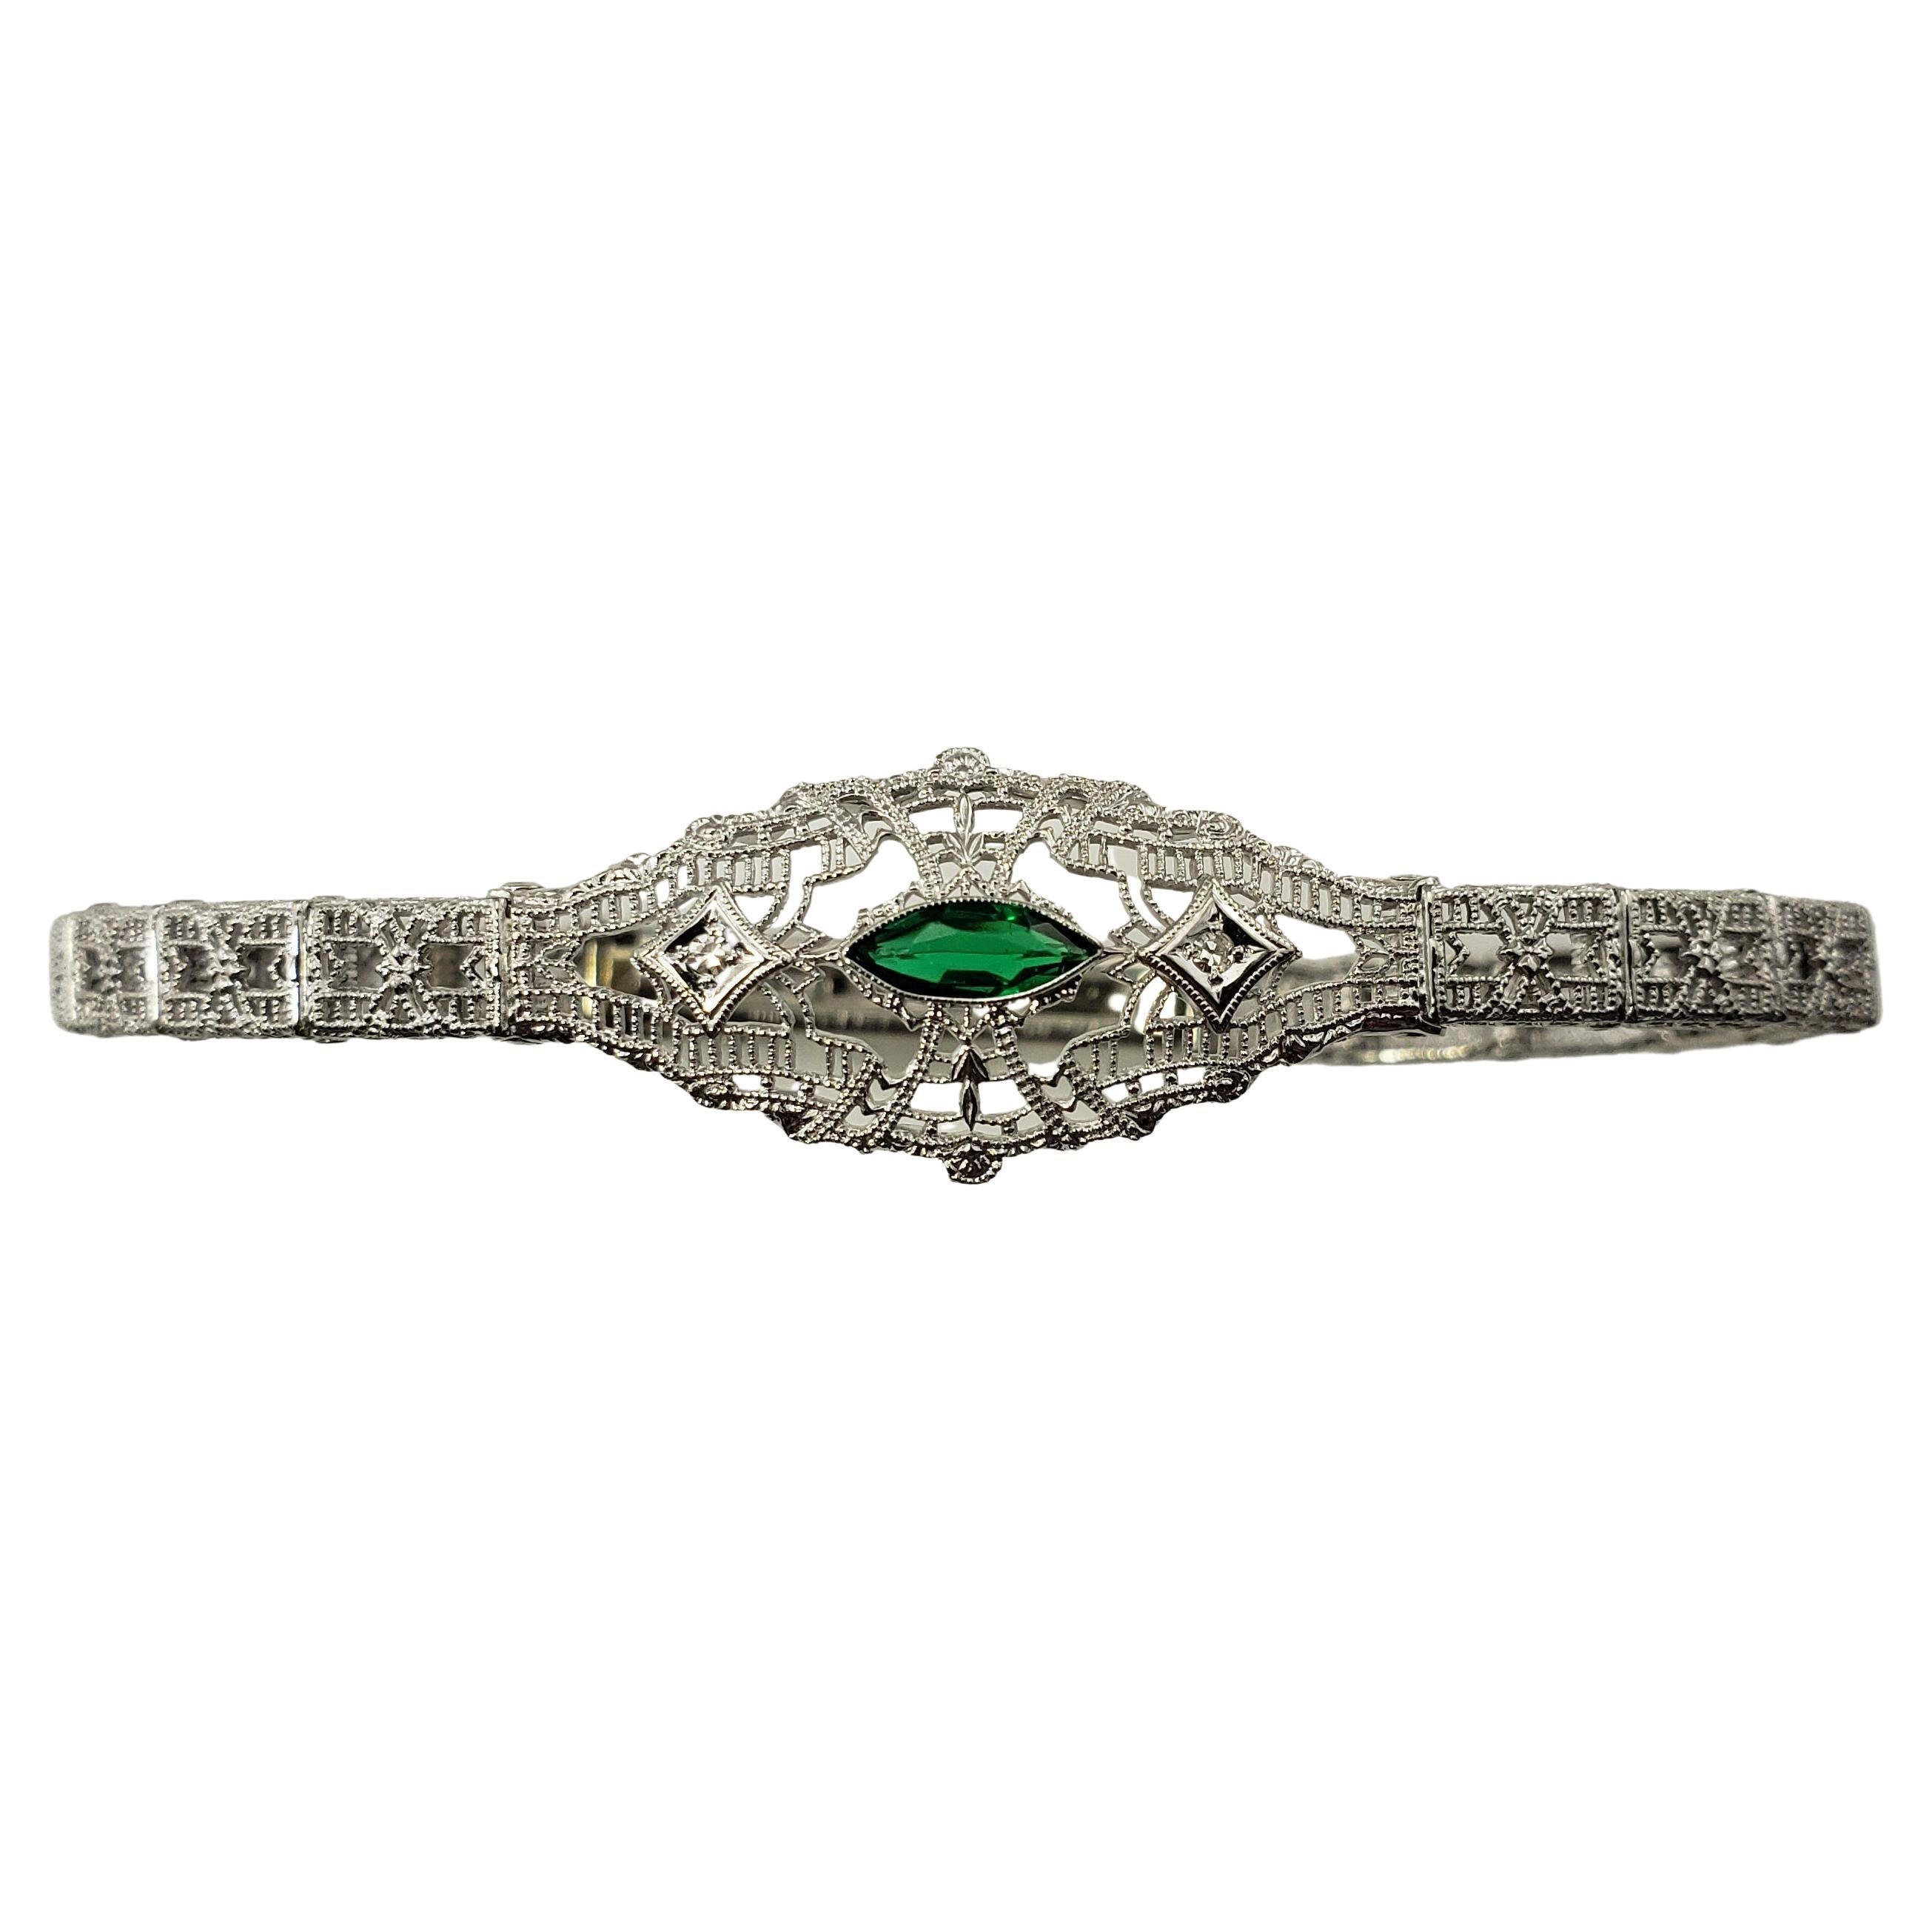 Vintage 10 Karat White Gold Filigree, Diamond and Simulated Emerald Bracelet